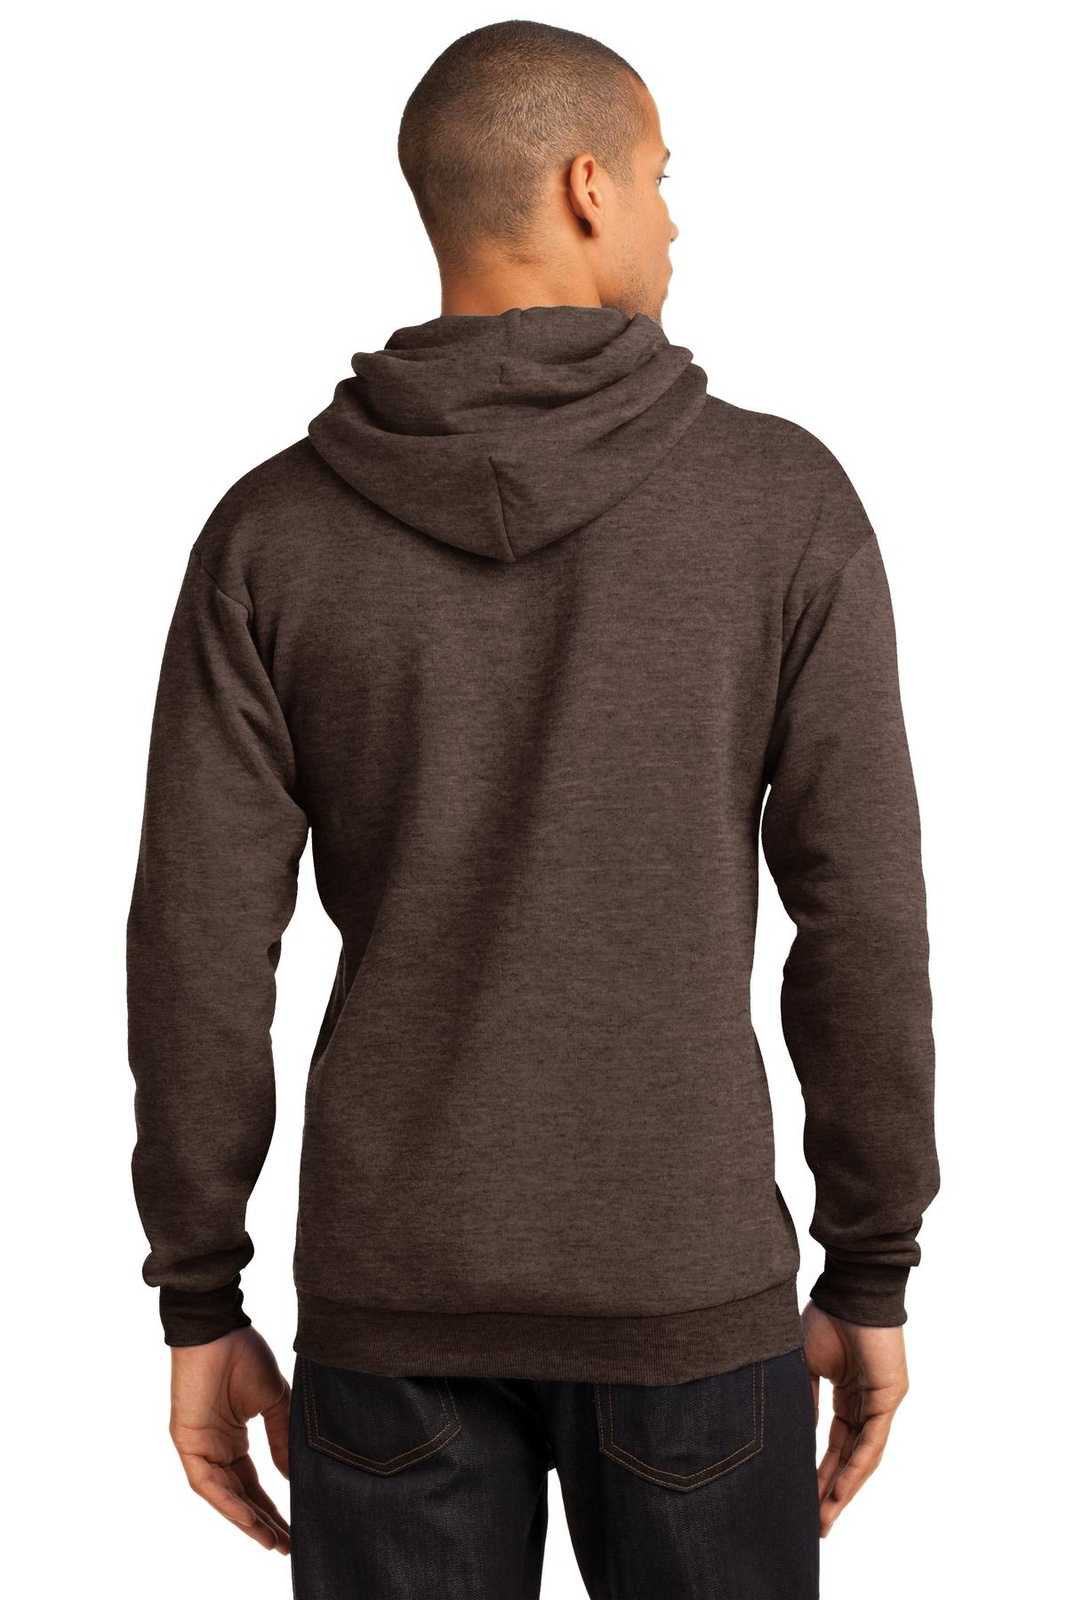 Port & Company PC78H Core Fleece Pullover Hooded Sweatshirt - Heather Dark Chocolate Brown - HIT a Double - 1